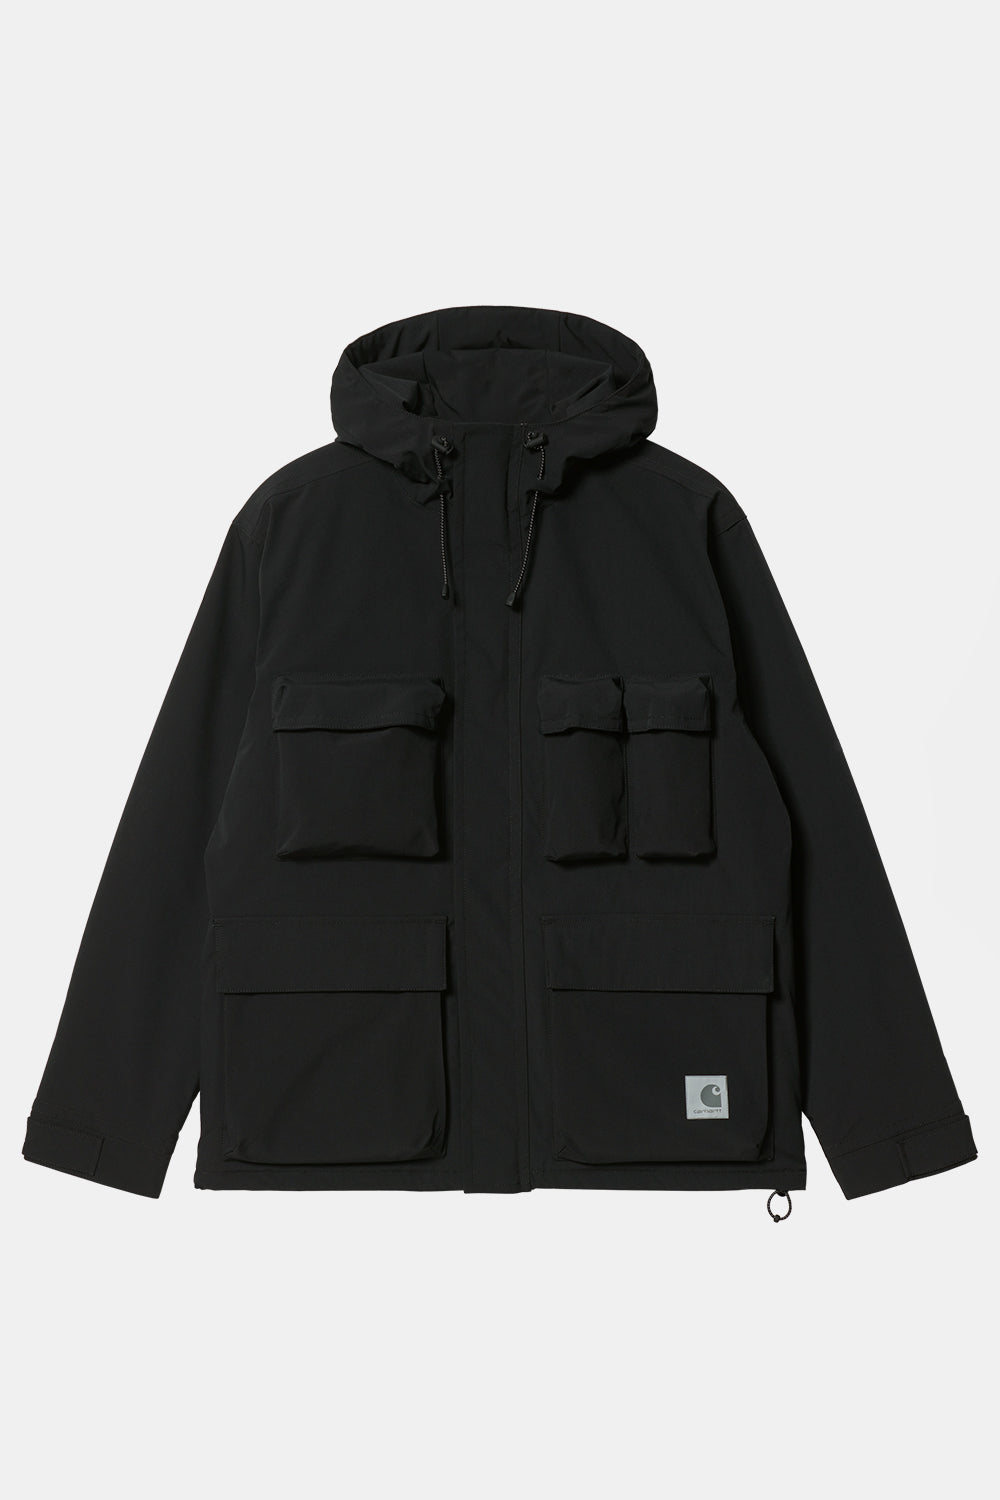 Carhartt WIP Kilda Jacket (Black)